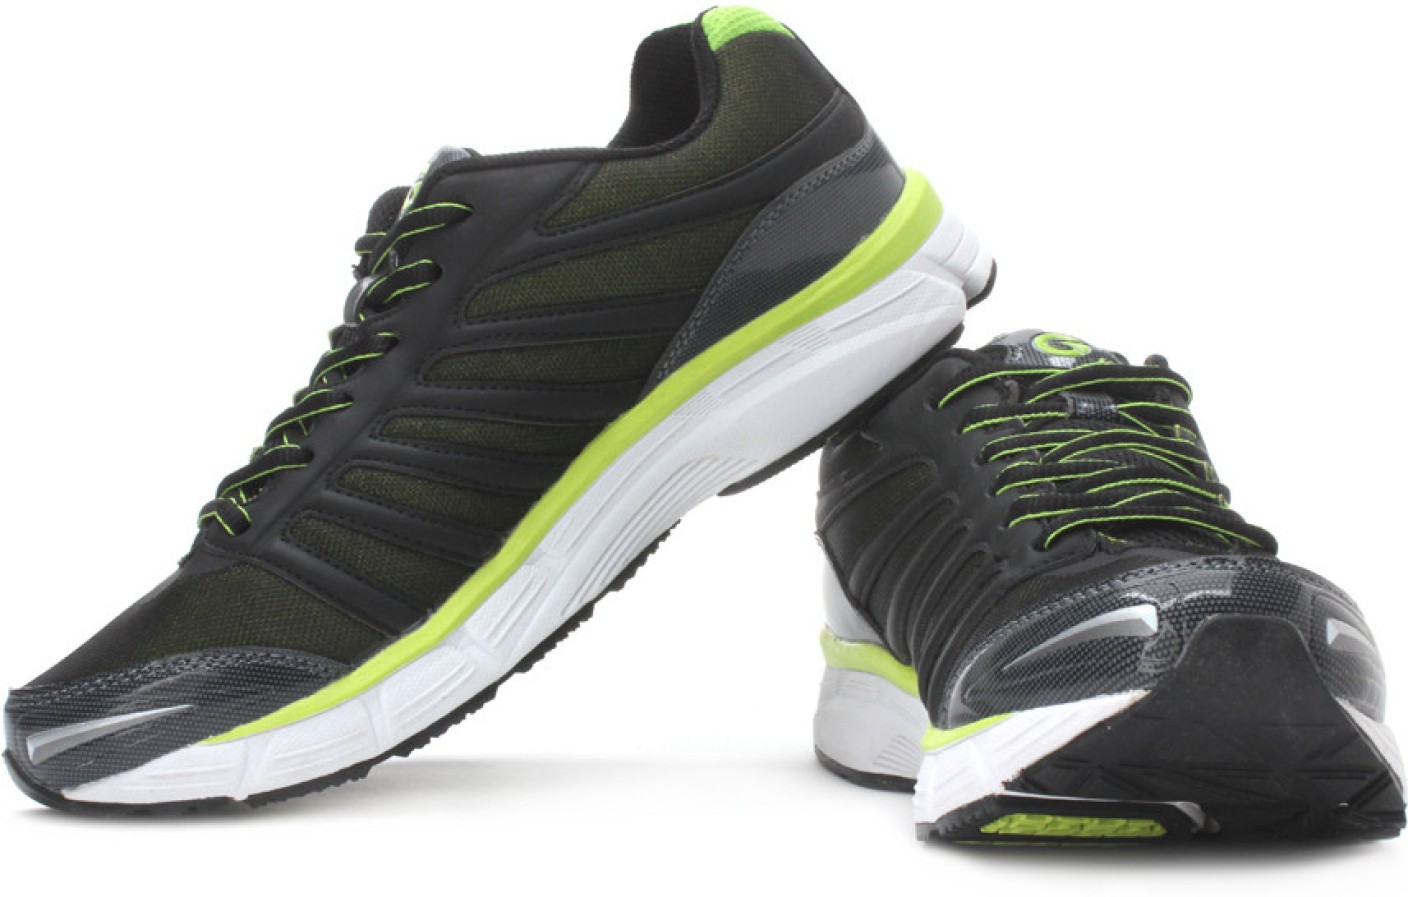 Globalite Anta Mesh Running Shoes For Men - Buy Black, Lime Color ...